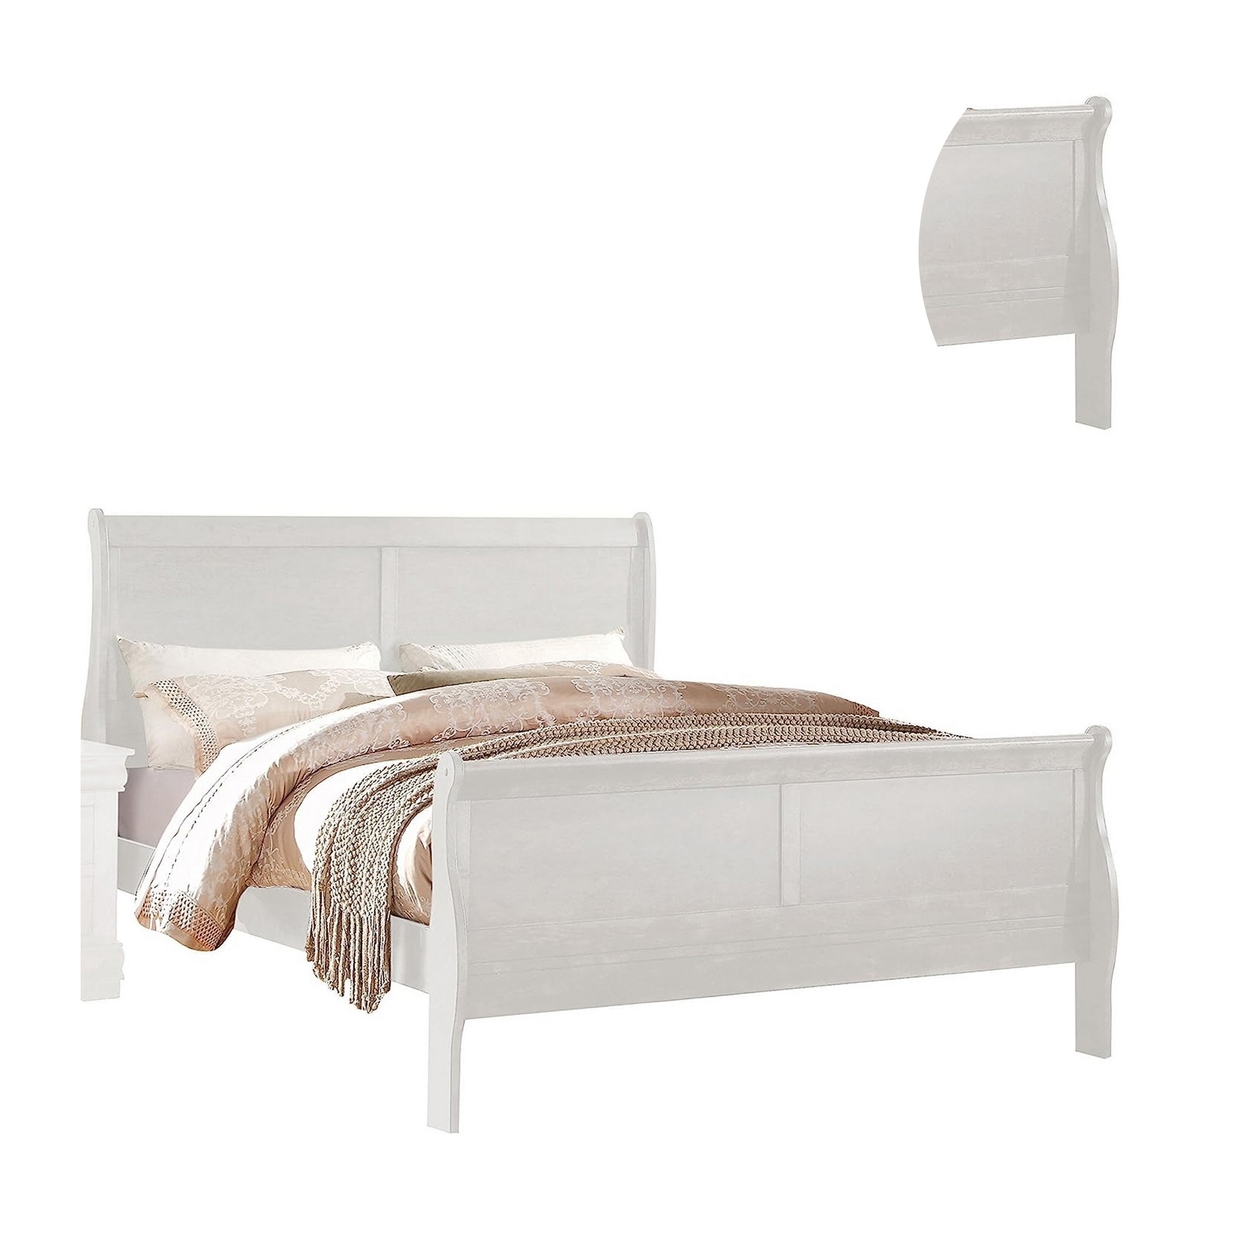 Nin King Size Sleigh Bed, Minimalist Style Headboard, Classic White Wood- Saltoro Sherpi